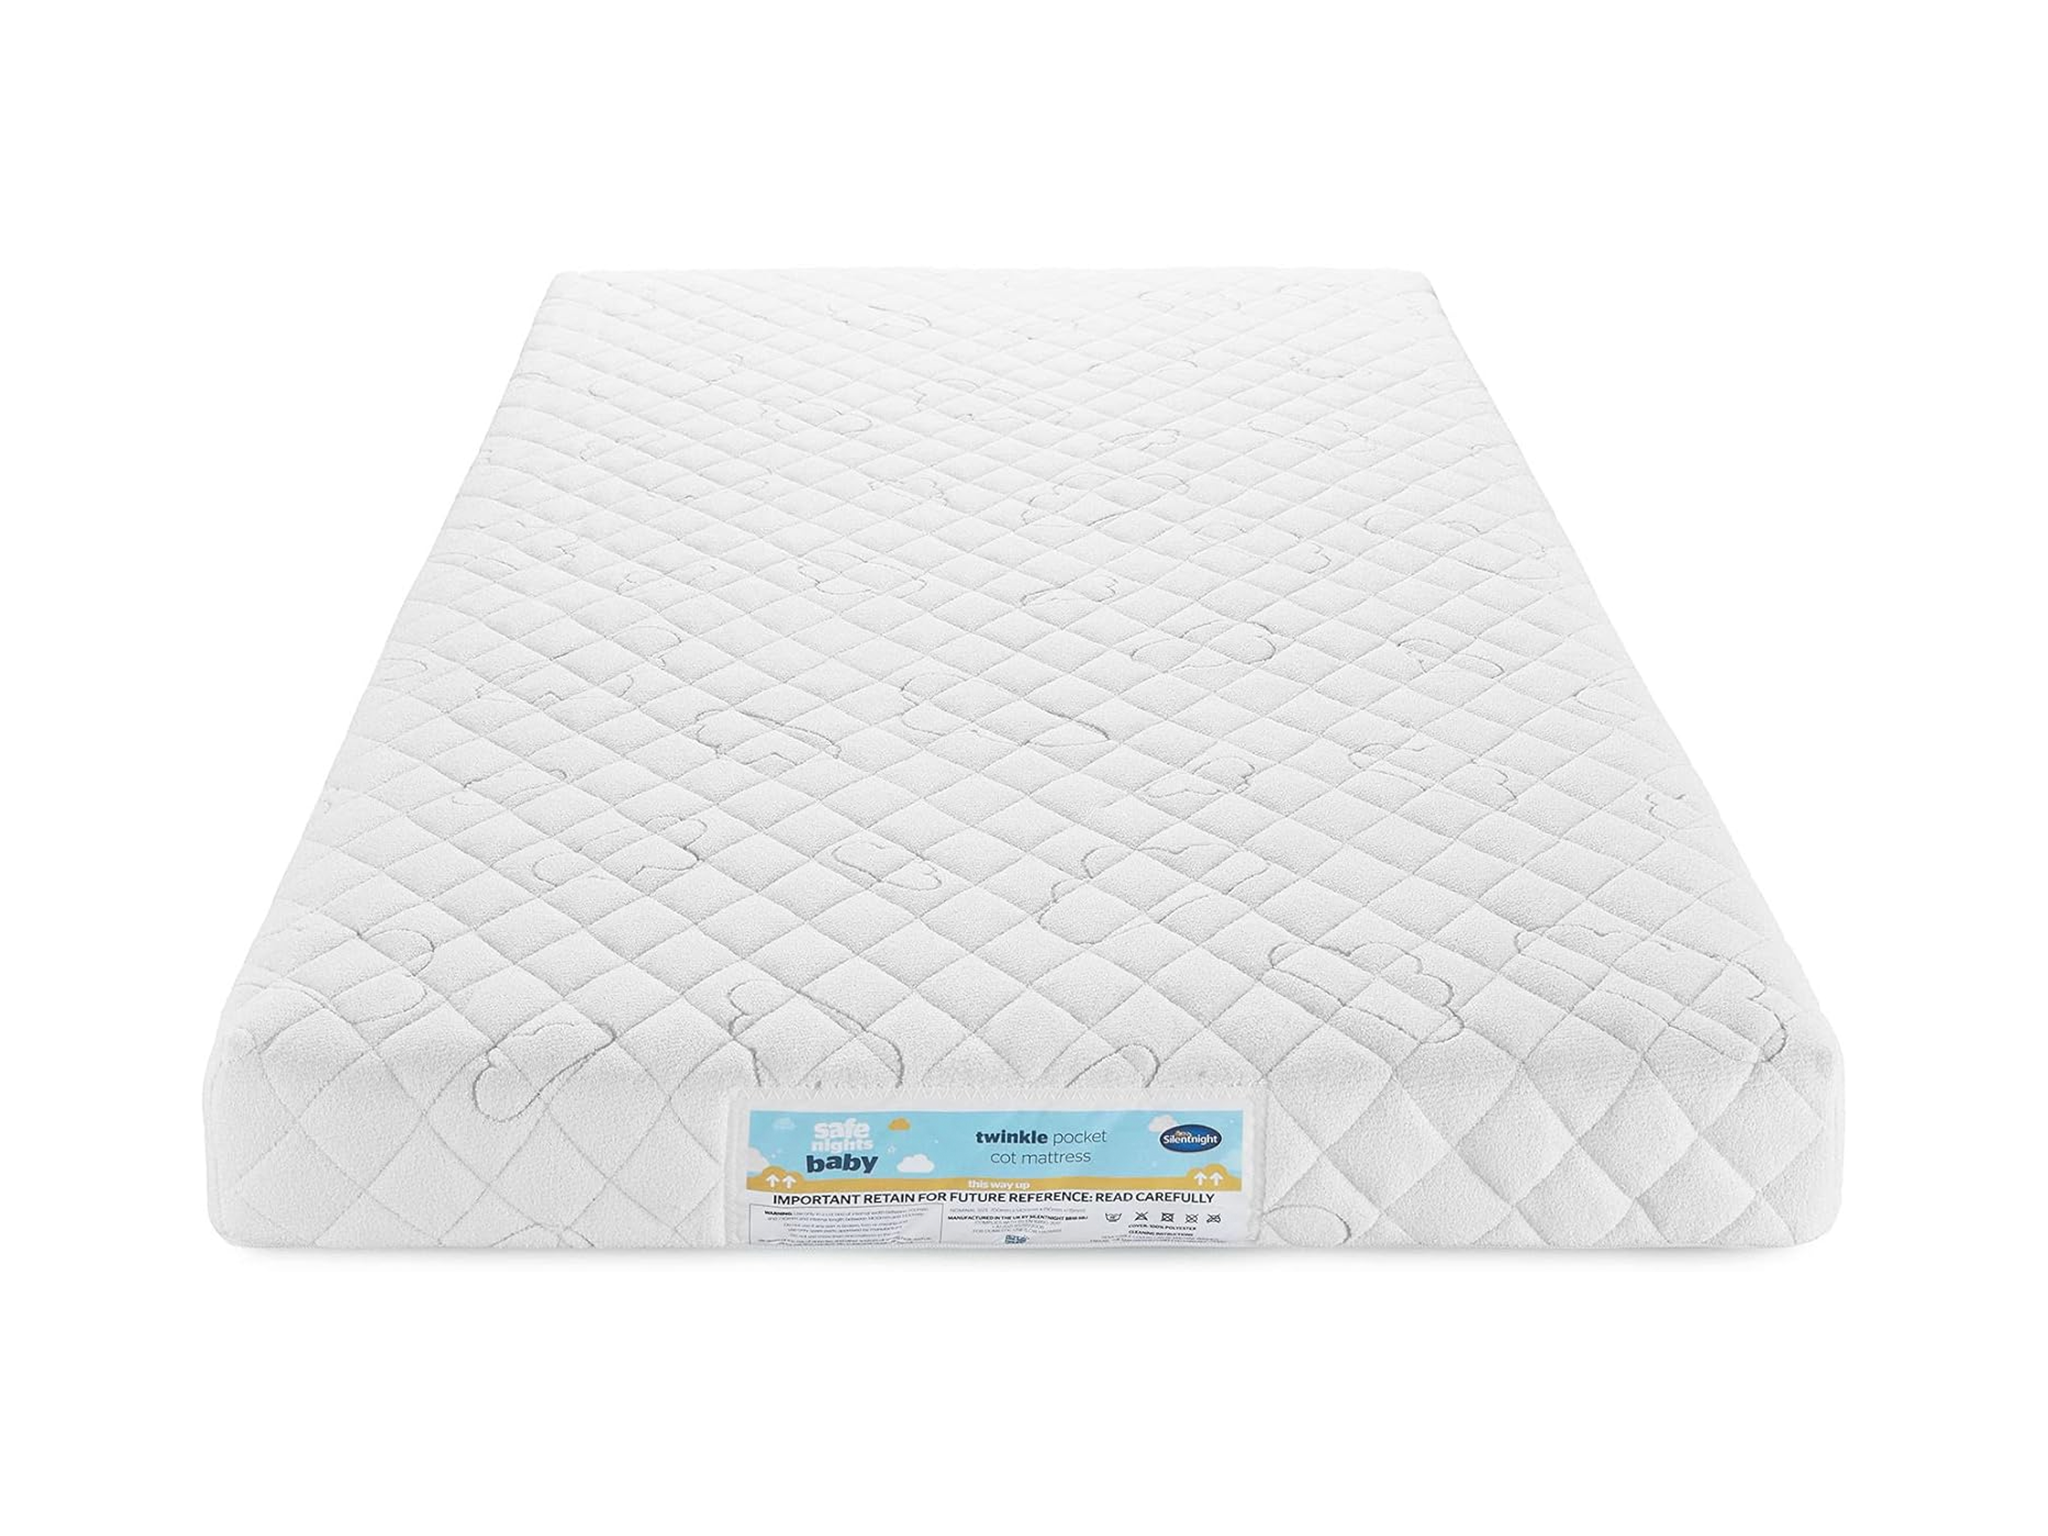 Silentnight safe nights twinkle breathable mattress